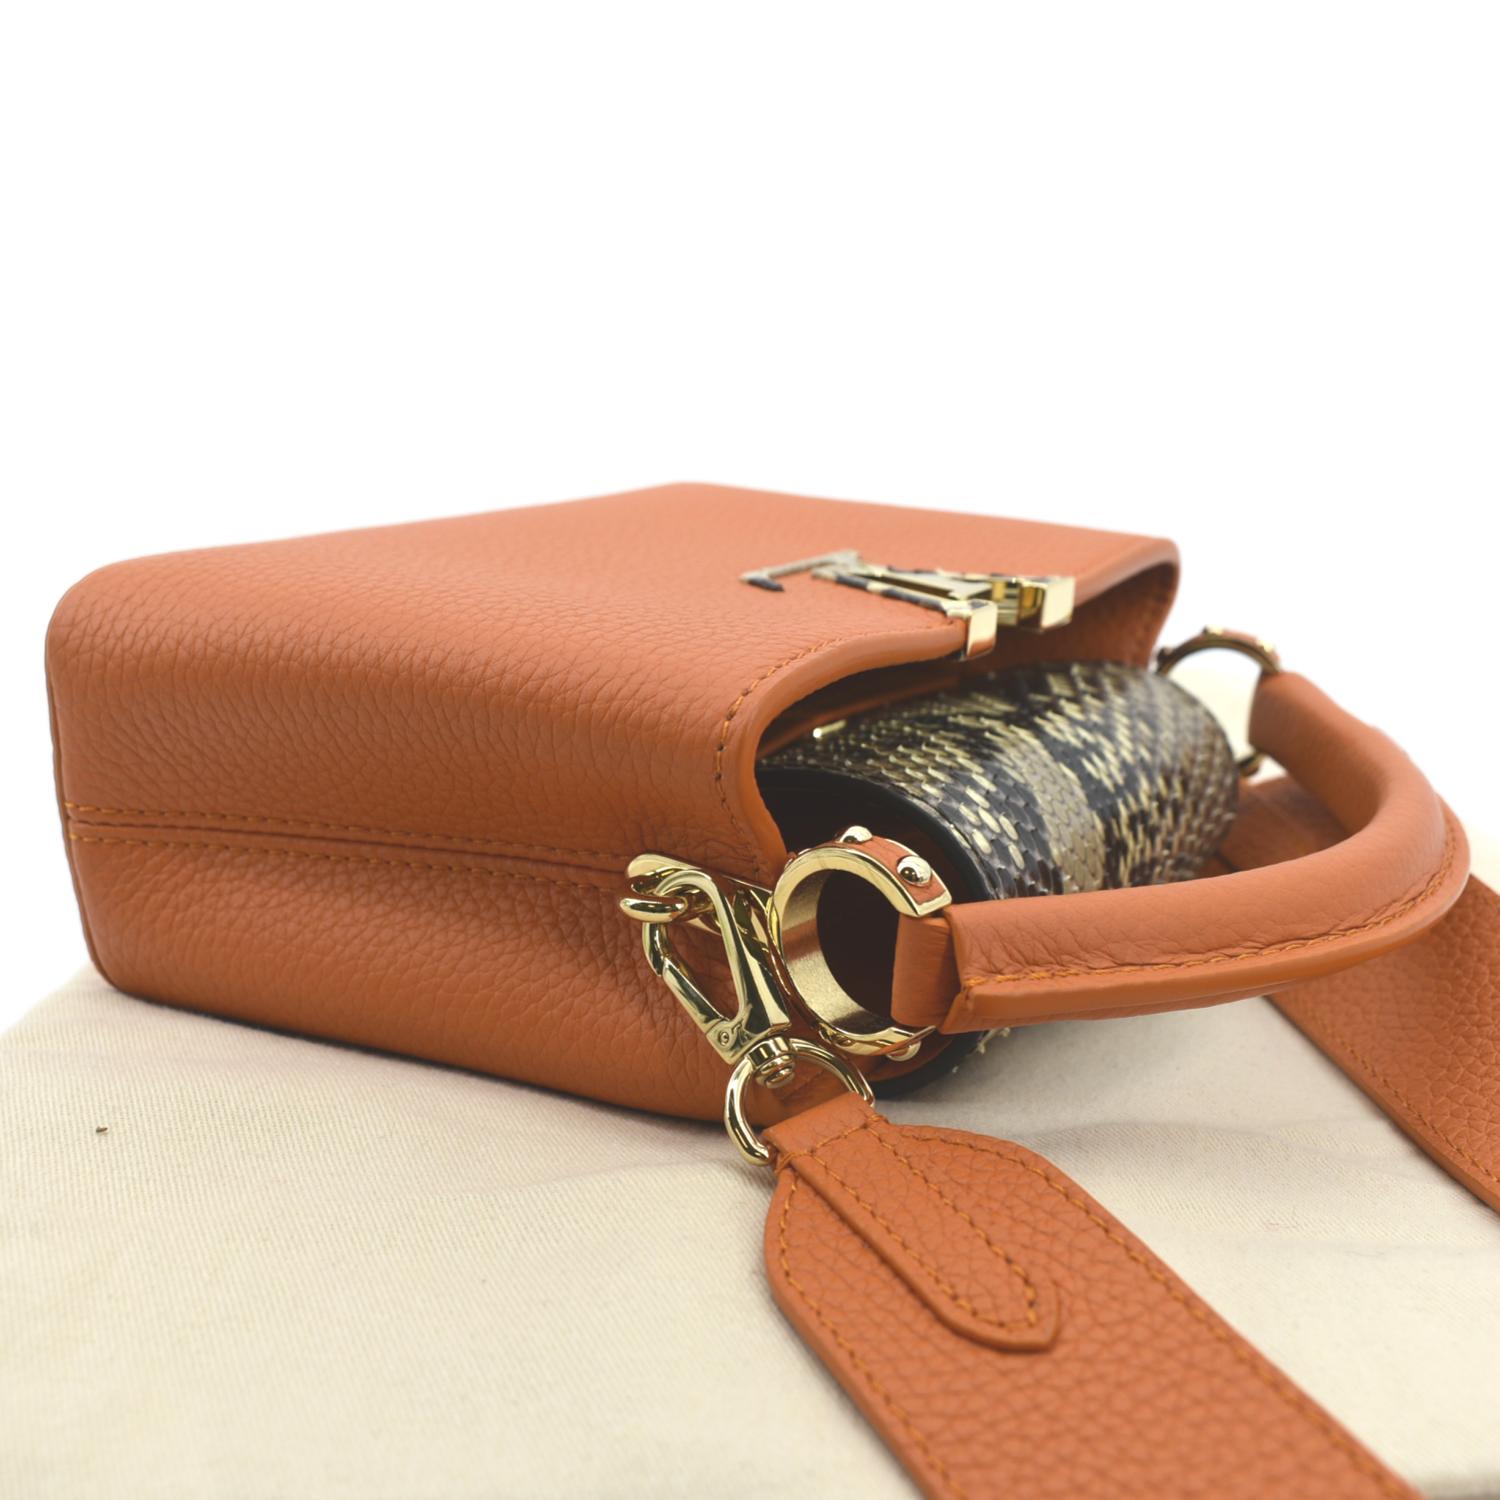 Capucines Mini - Women - Handbags